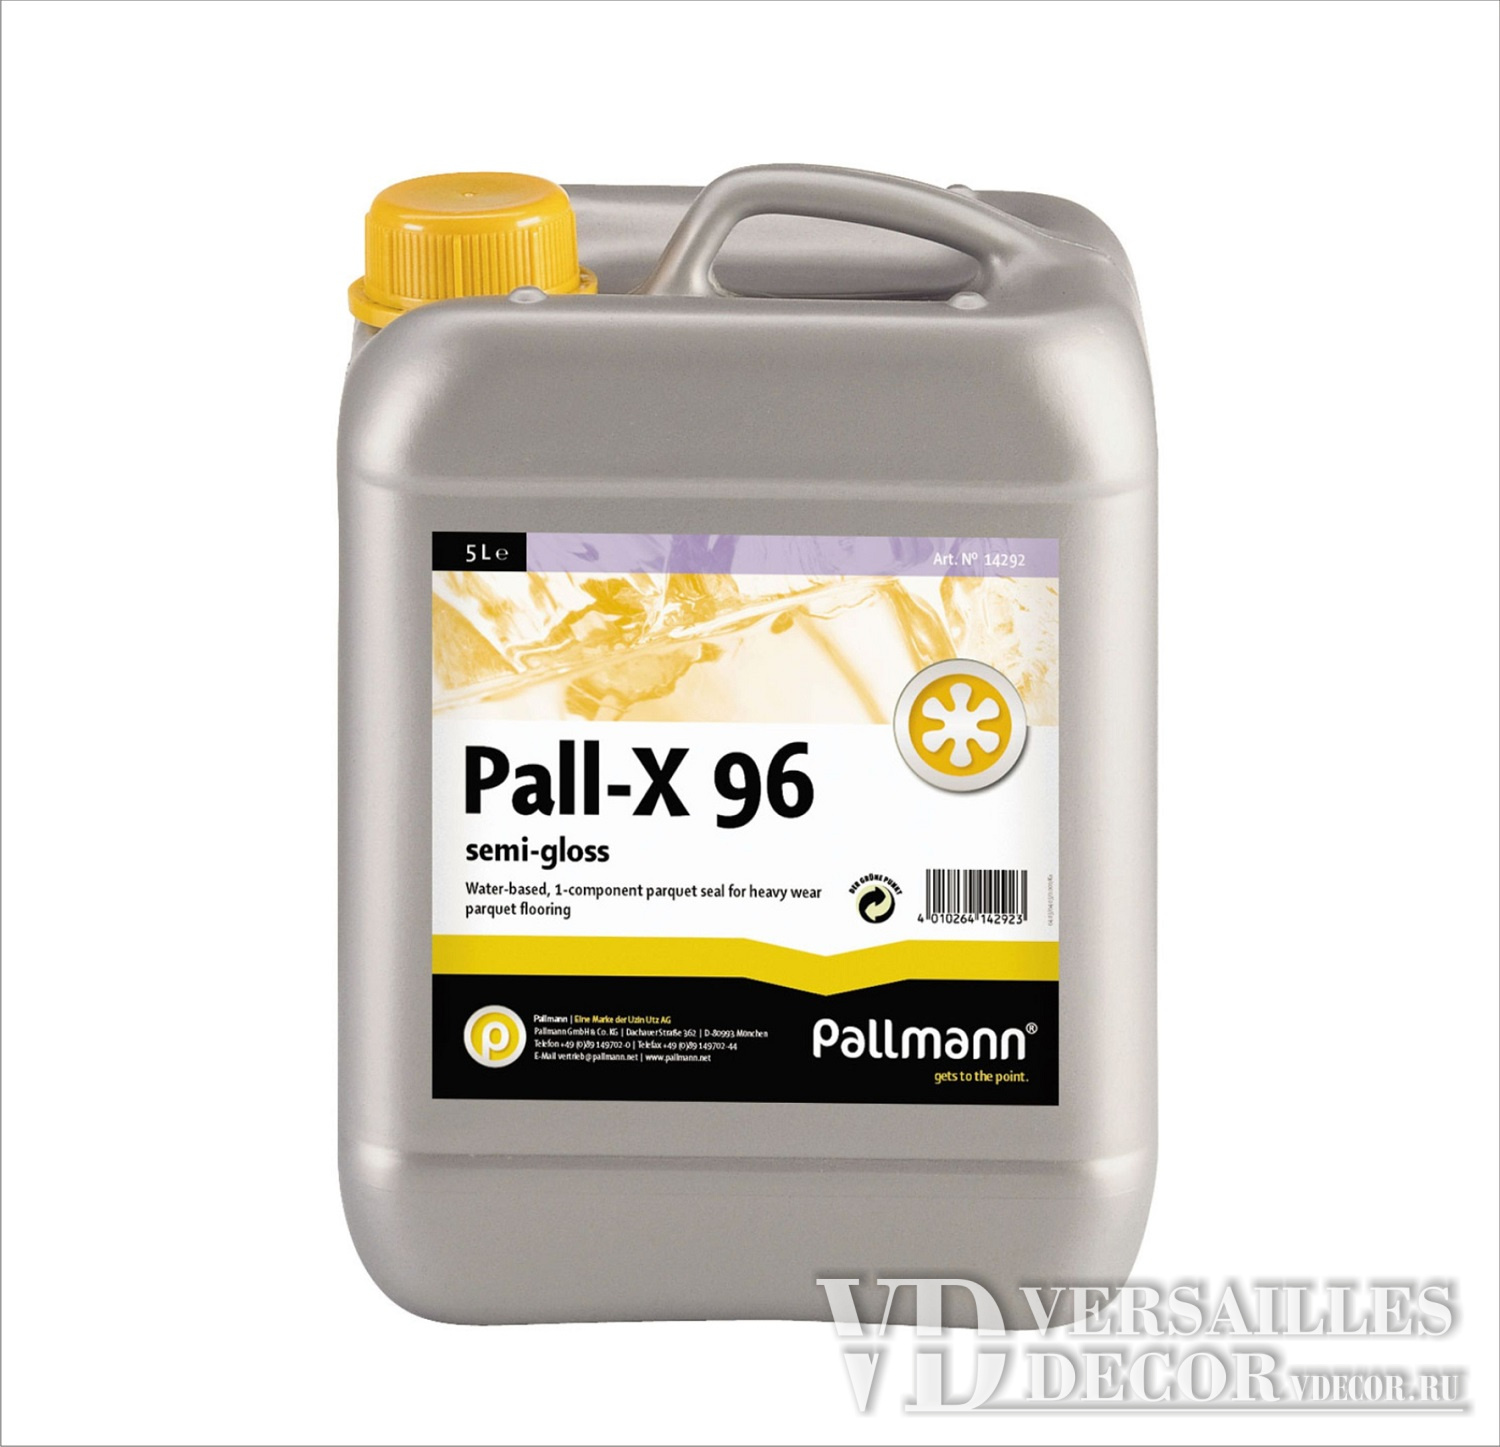 Pall X 96